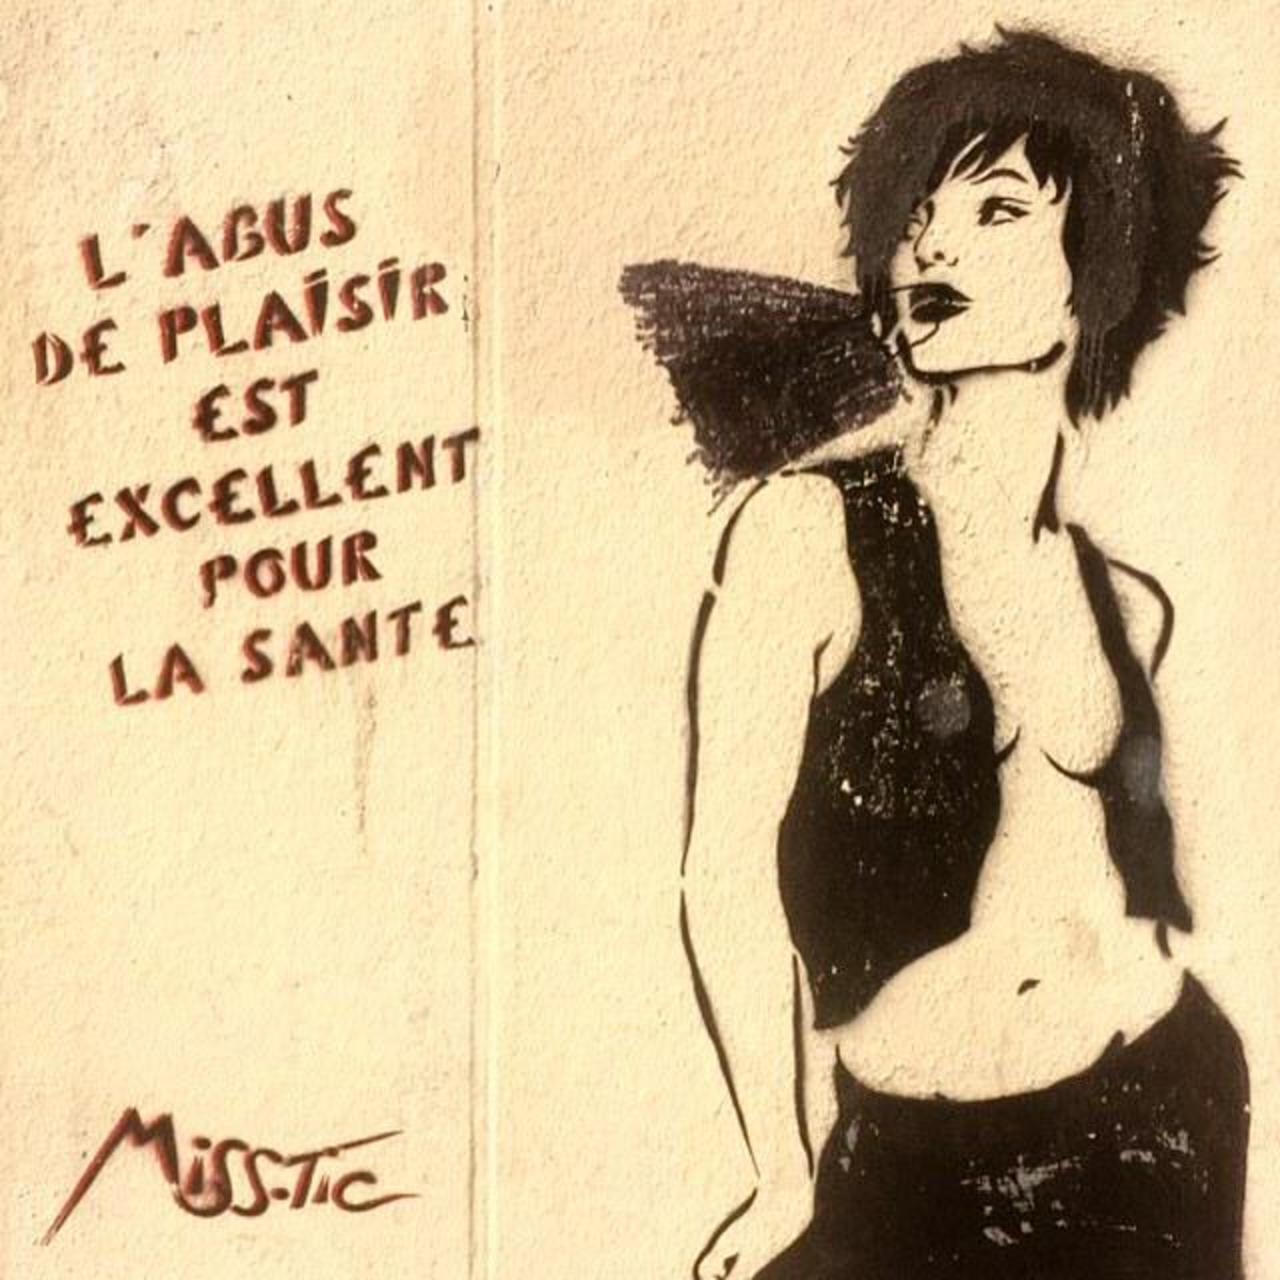 ParisInstagram: "the abuse of pleasure is excellent for health." #graffiti #streetart #misstic #paris #art… … http://t.co/Oc1ZCjv6mb